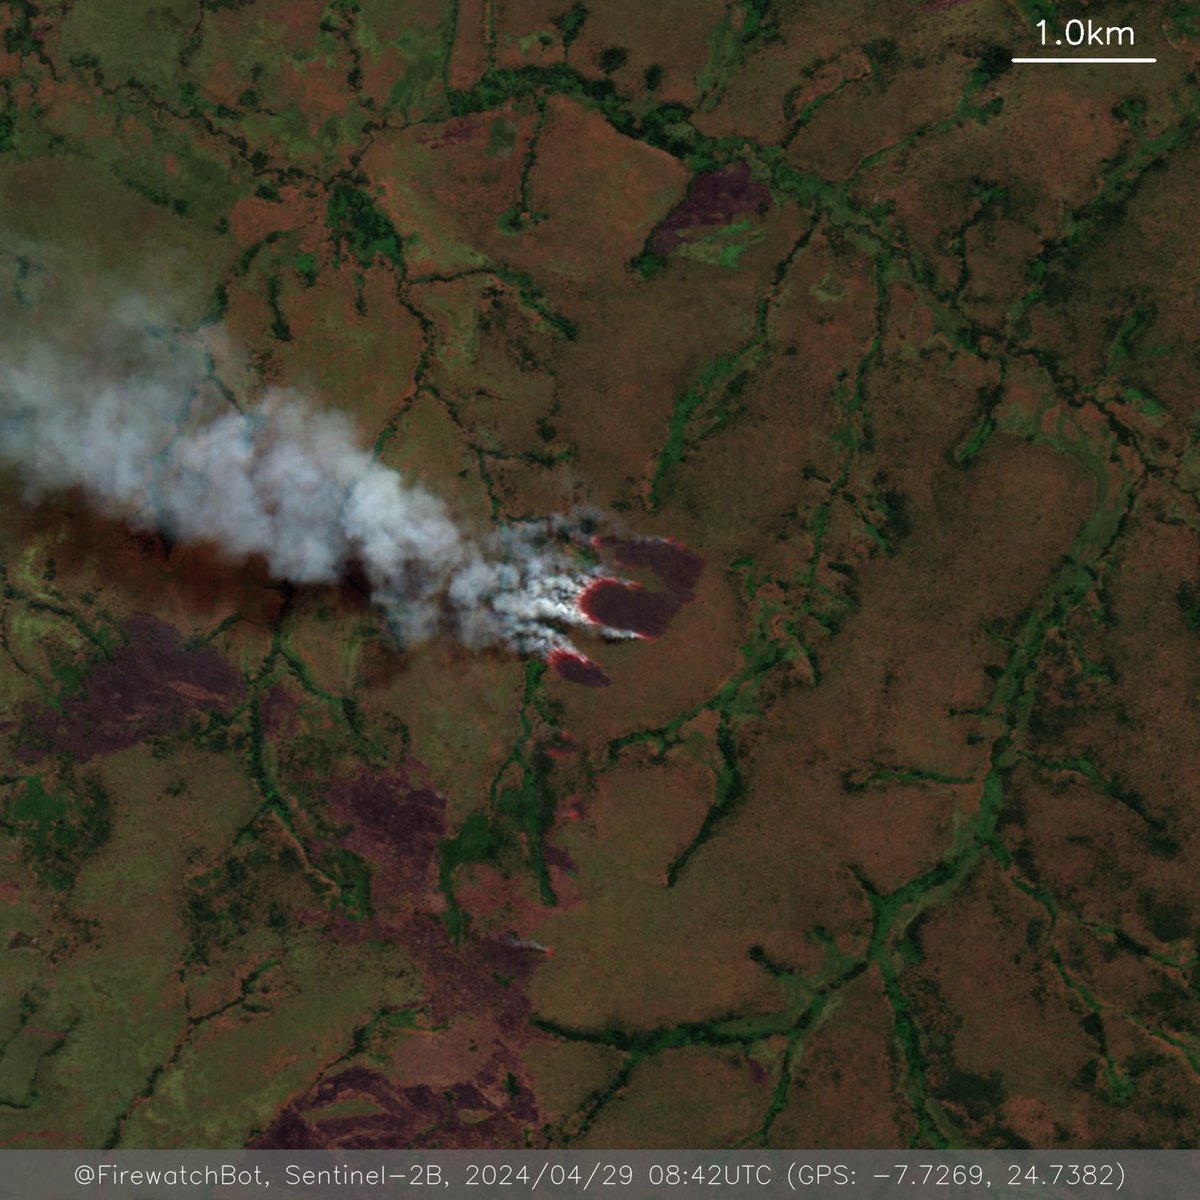 Fire detected from #Sentinel2

🗺 Place: Kamina, Haut-Lomami, #DemocraticRepublicoftheCongo
🕛 Date: 2024/04/29 08:42UTC

View location: maps.google.com/?q=-7.72691165… (-7.7269, 24.7382)